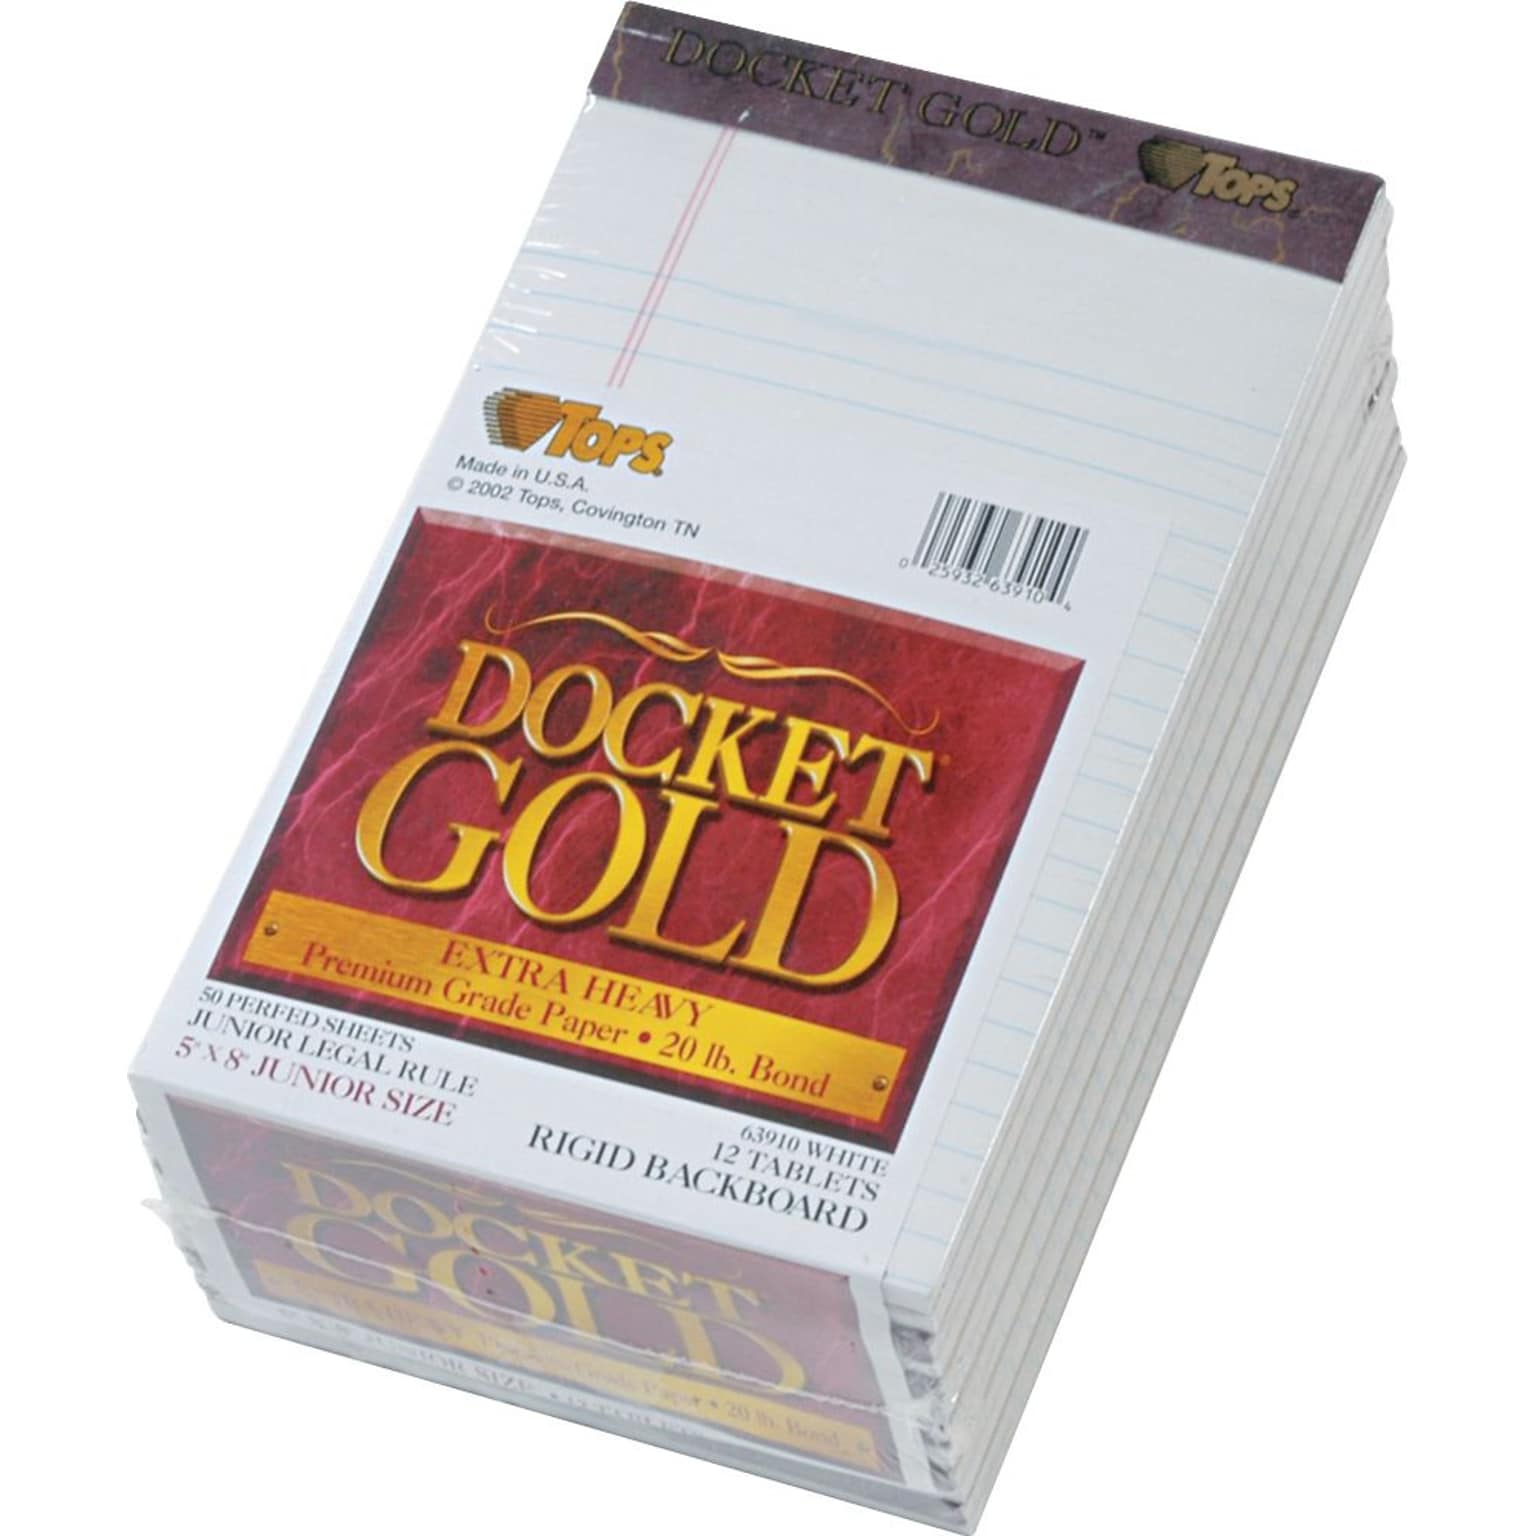 Docket® Gold Notepad, jr. Legal Rule, White, 20 lb, Rigid Back, 50 Sheets/Pad, 12 Pads/Pack, 5 x 8